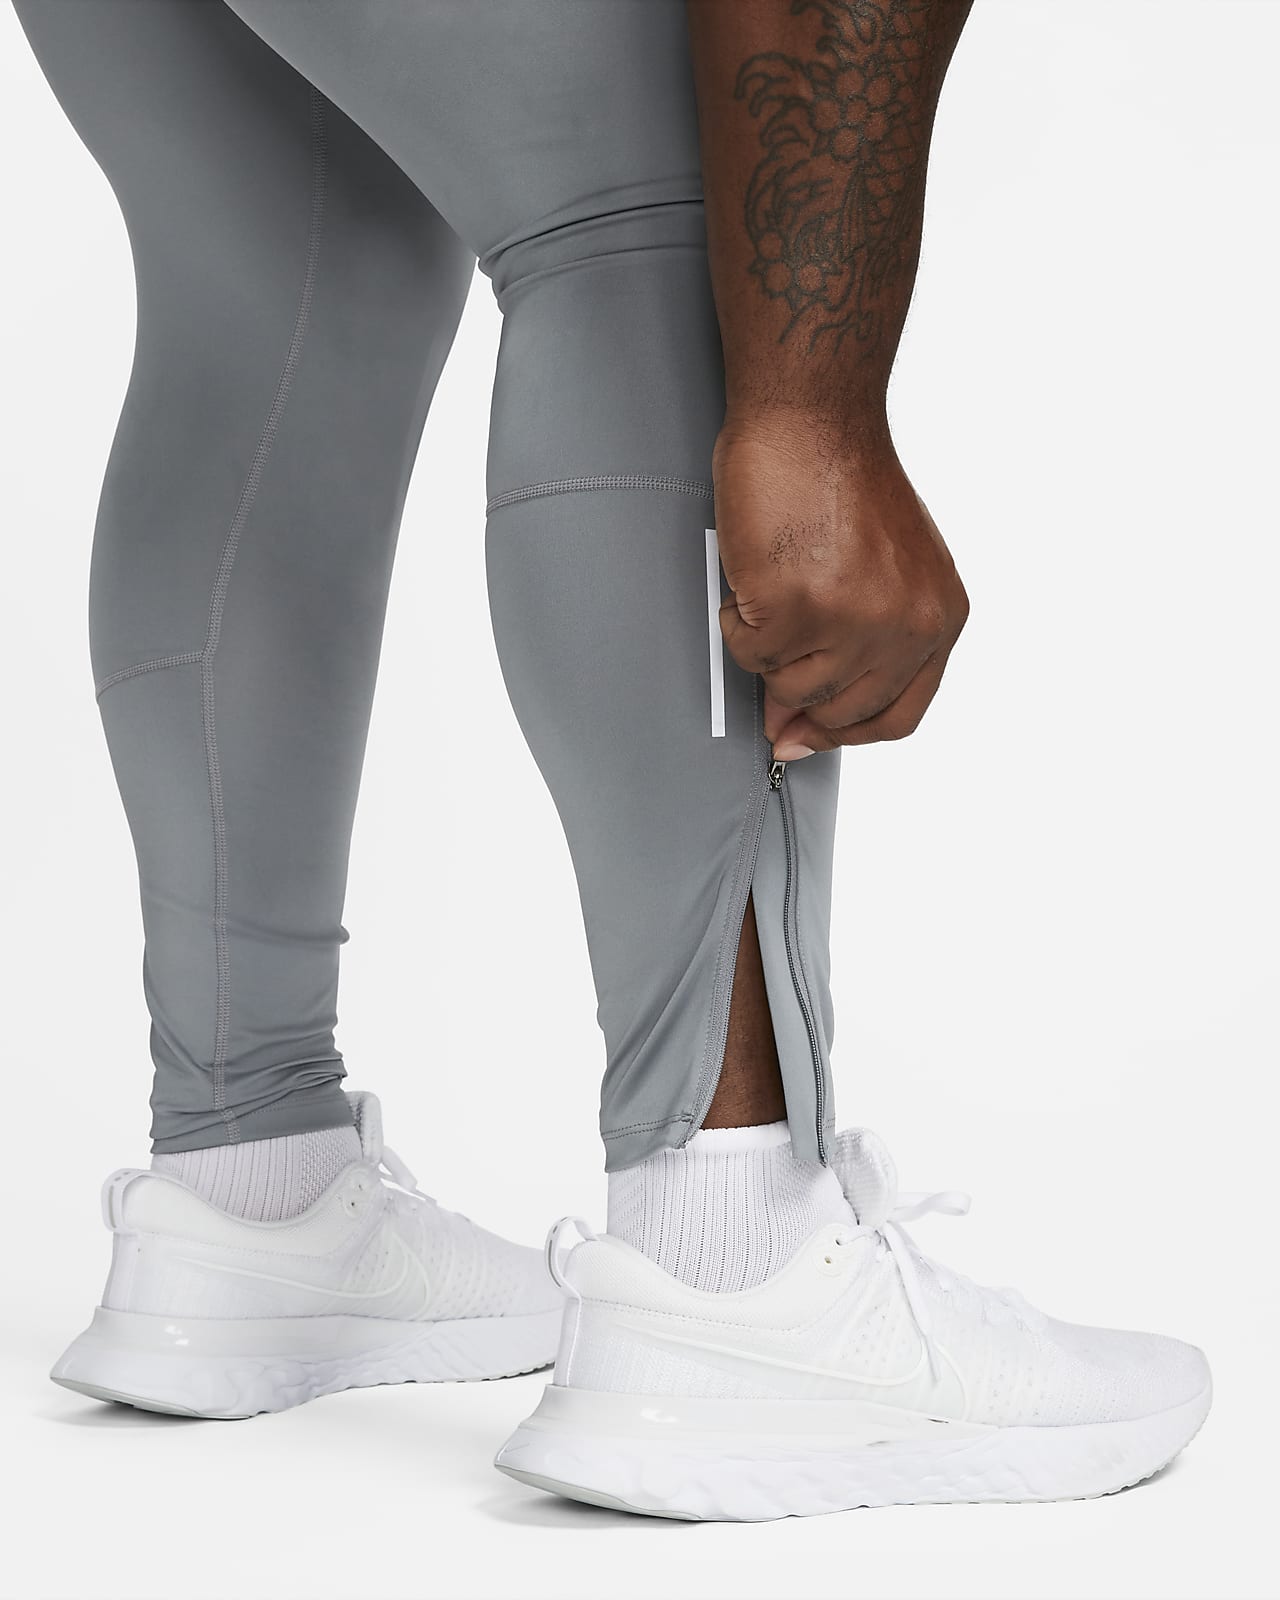 Nike Tech Men's Running Tights